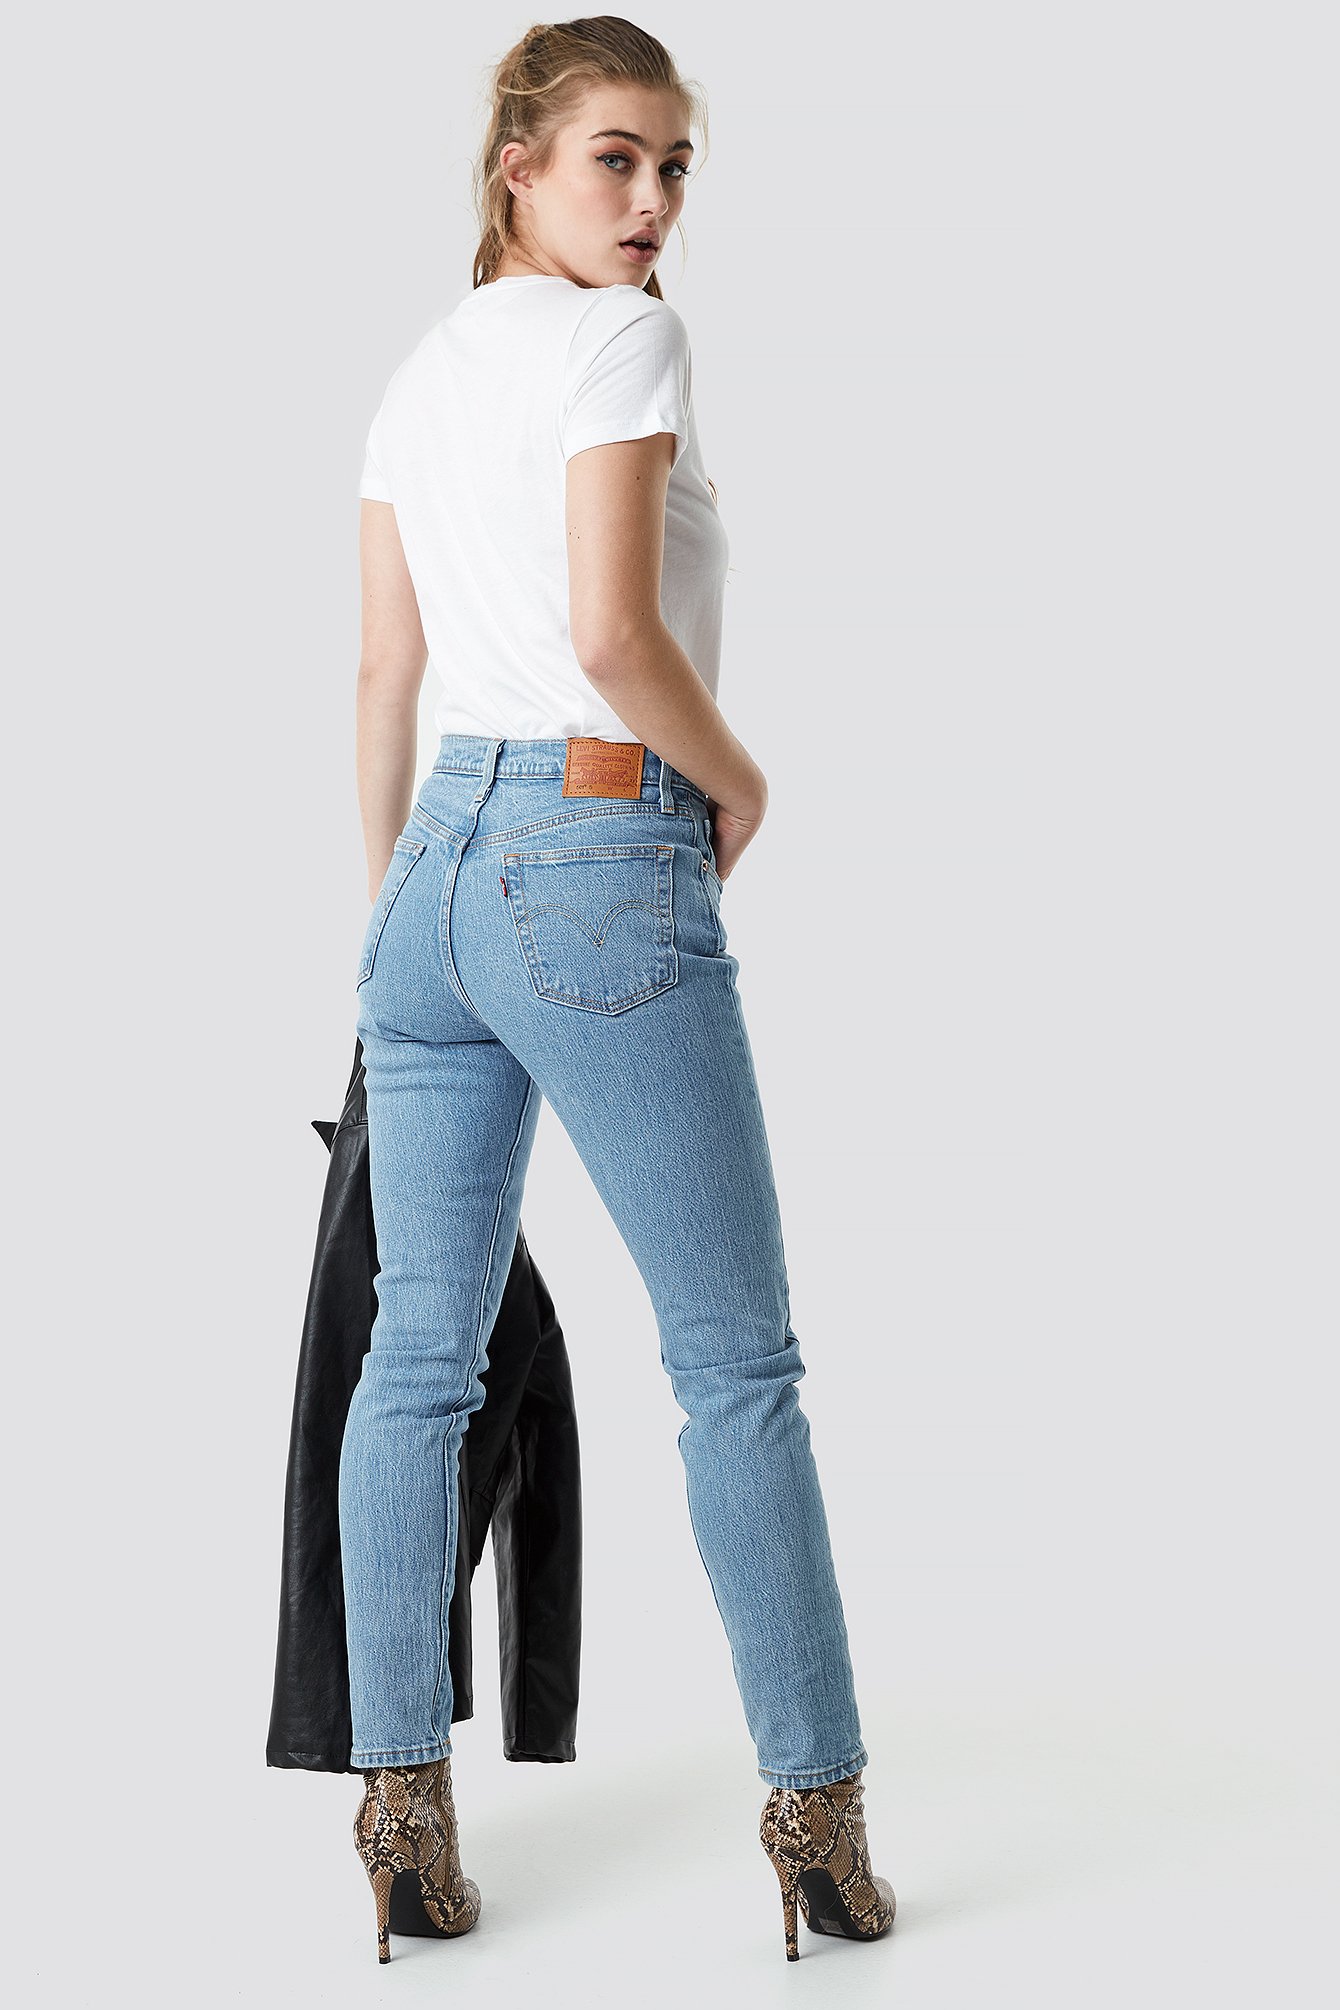 501 skinny jeans levis